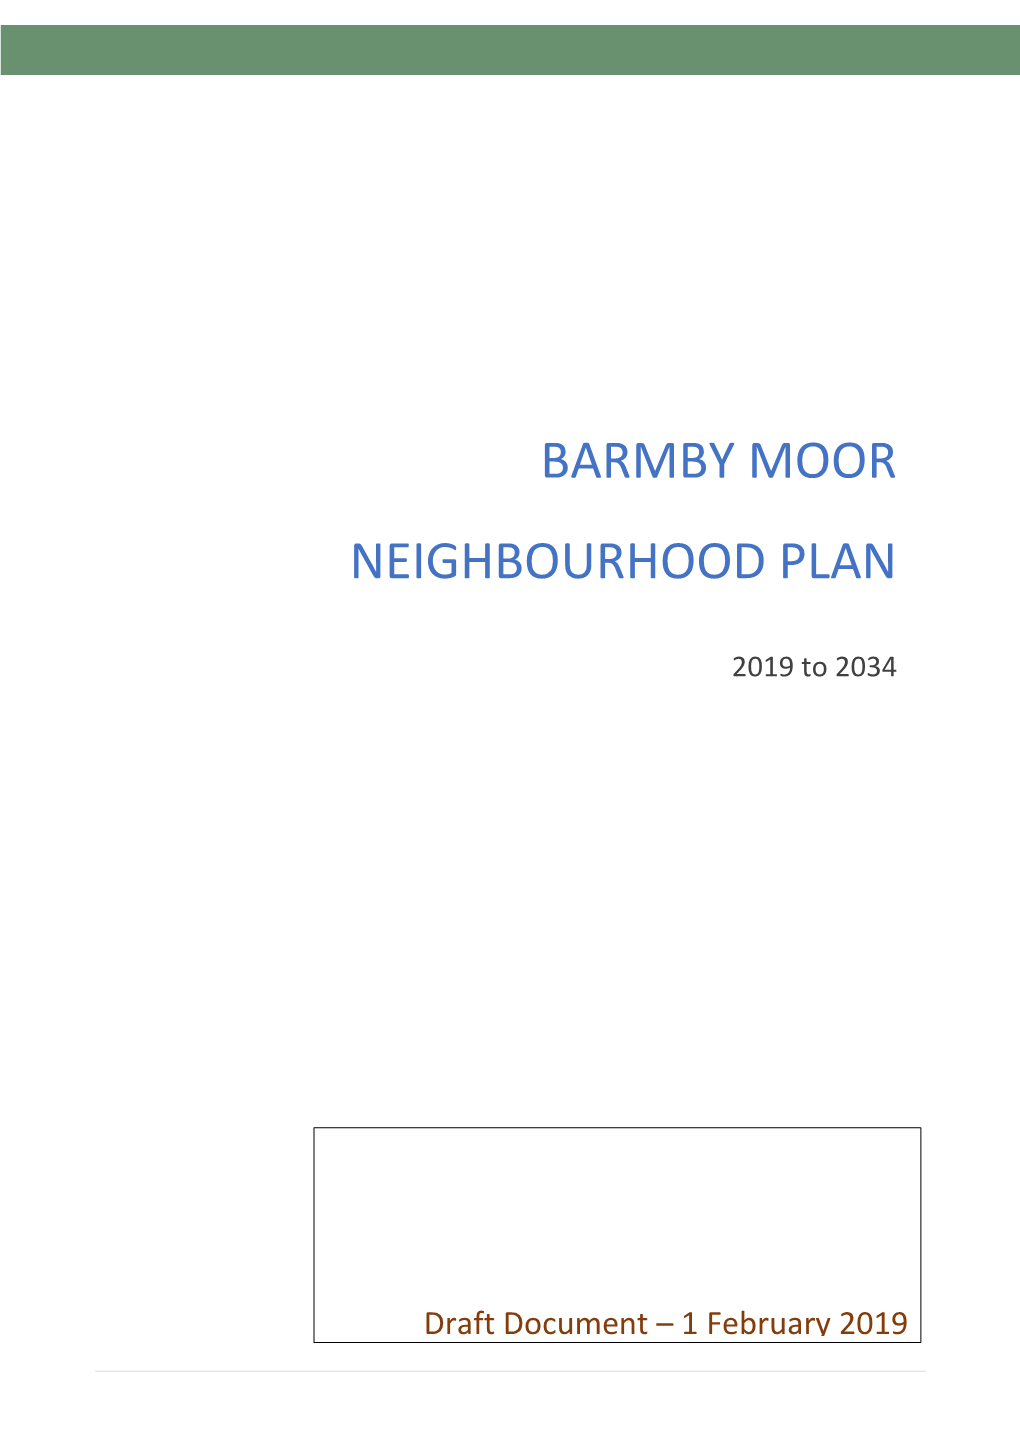 Barmby Moor Neighbourhood Plan